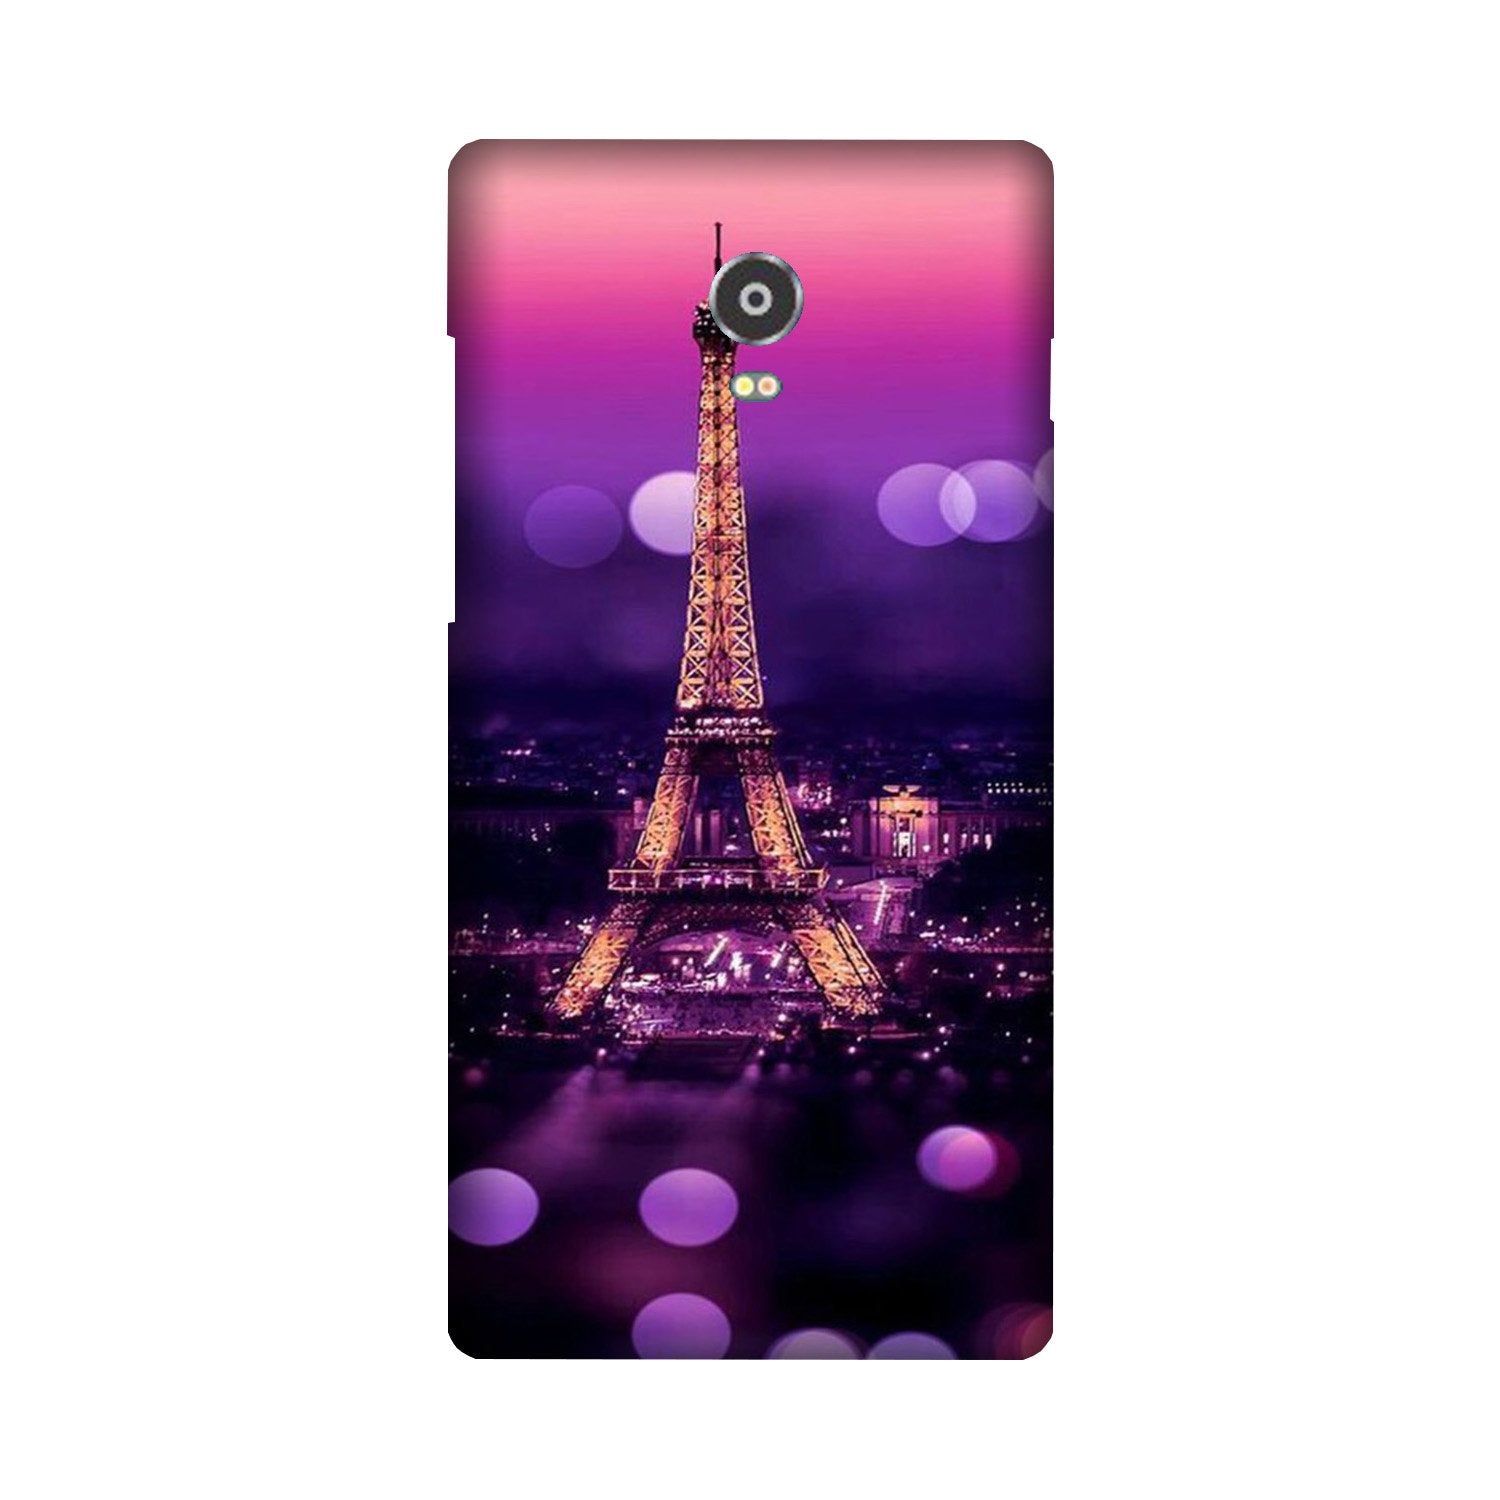 Eiffel Tower Case for Lenovo Vibe P1